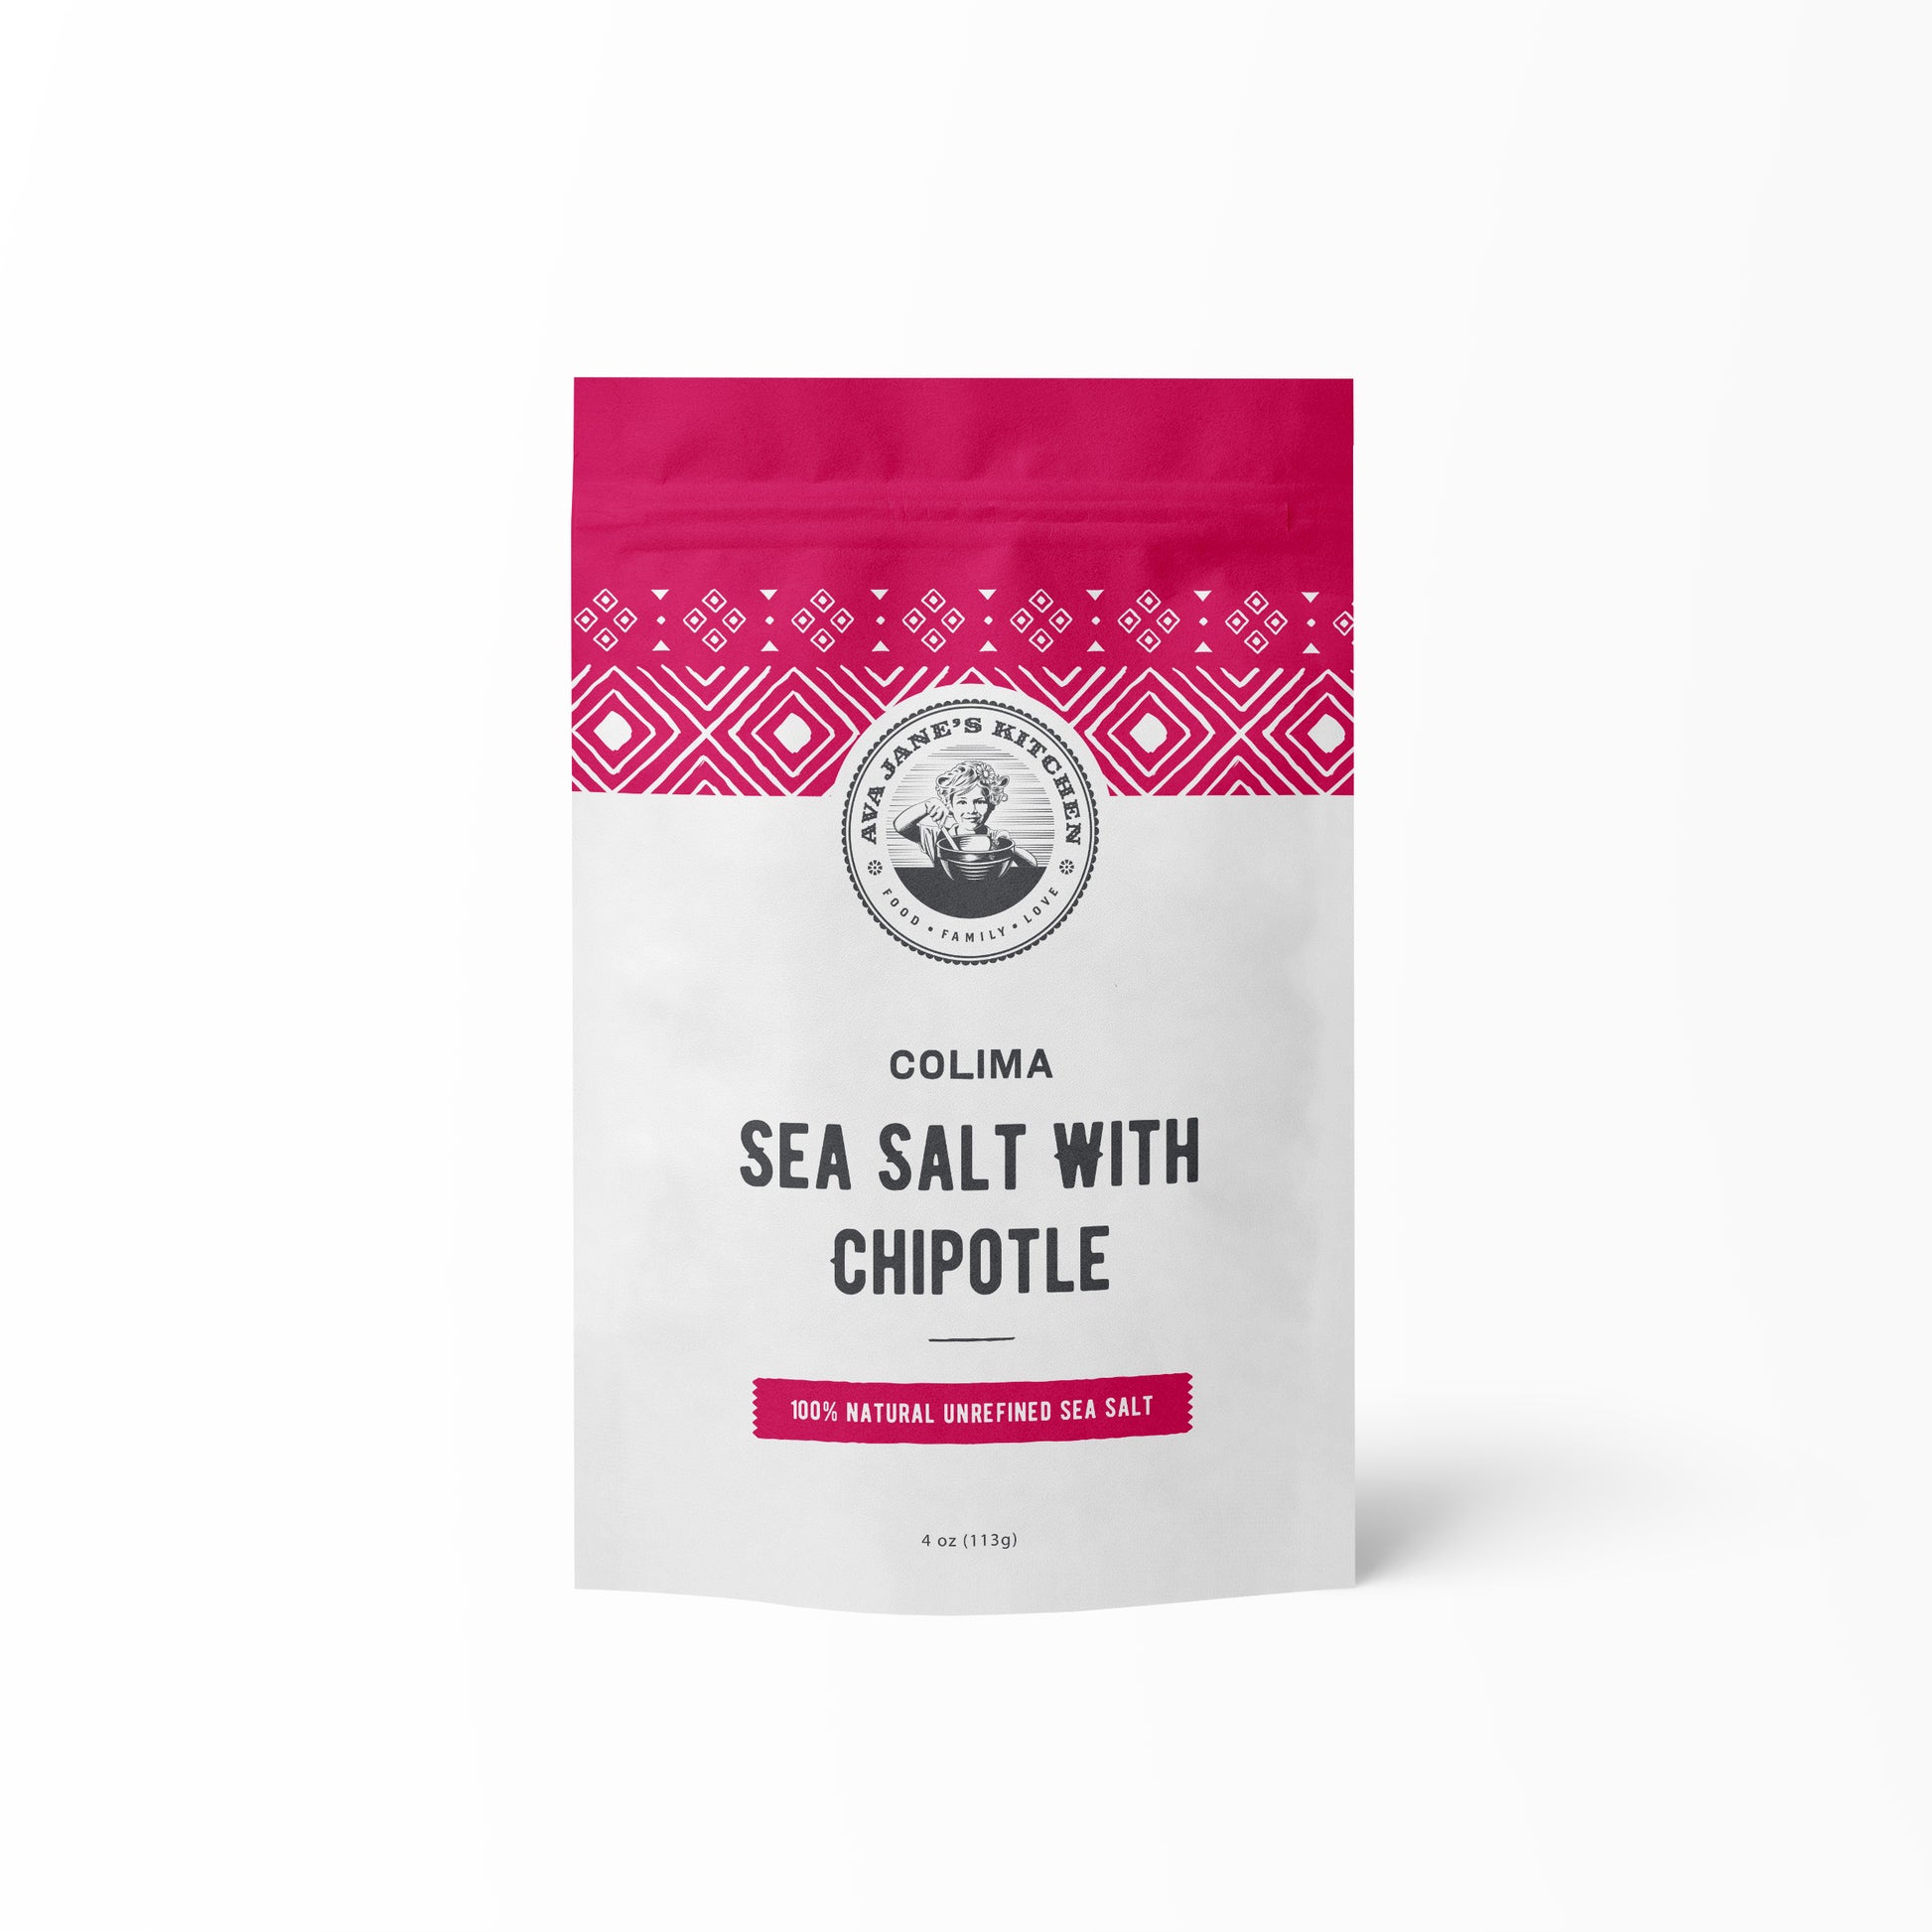 Ava Jane Kitchen Flavored Salt with chipotle.